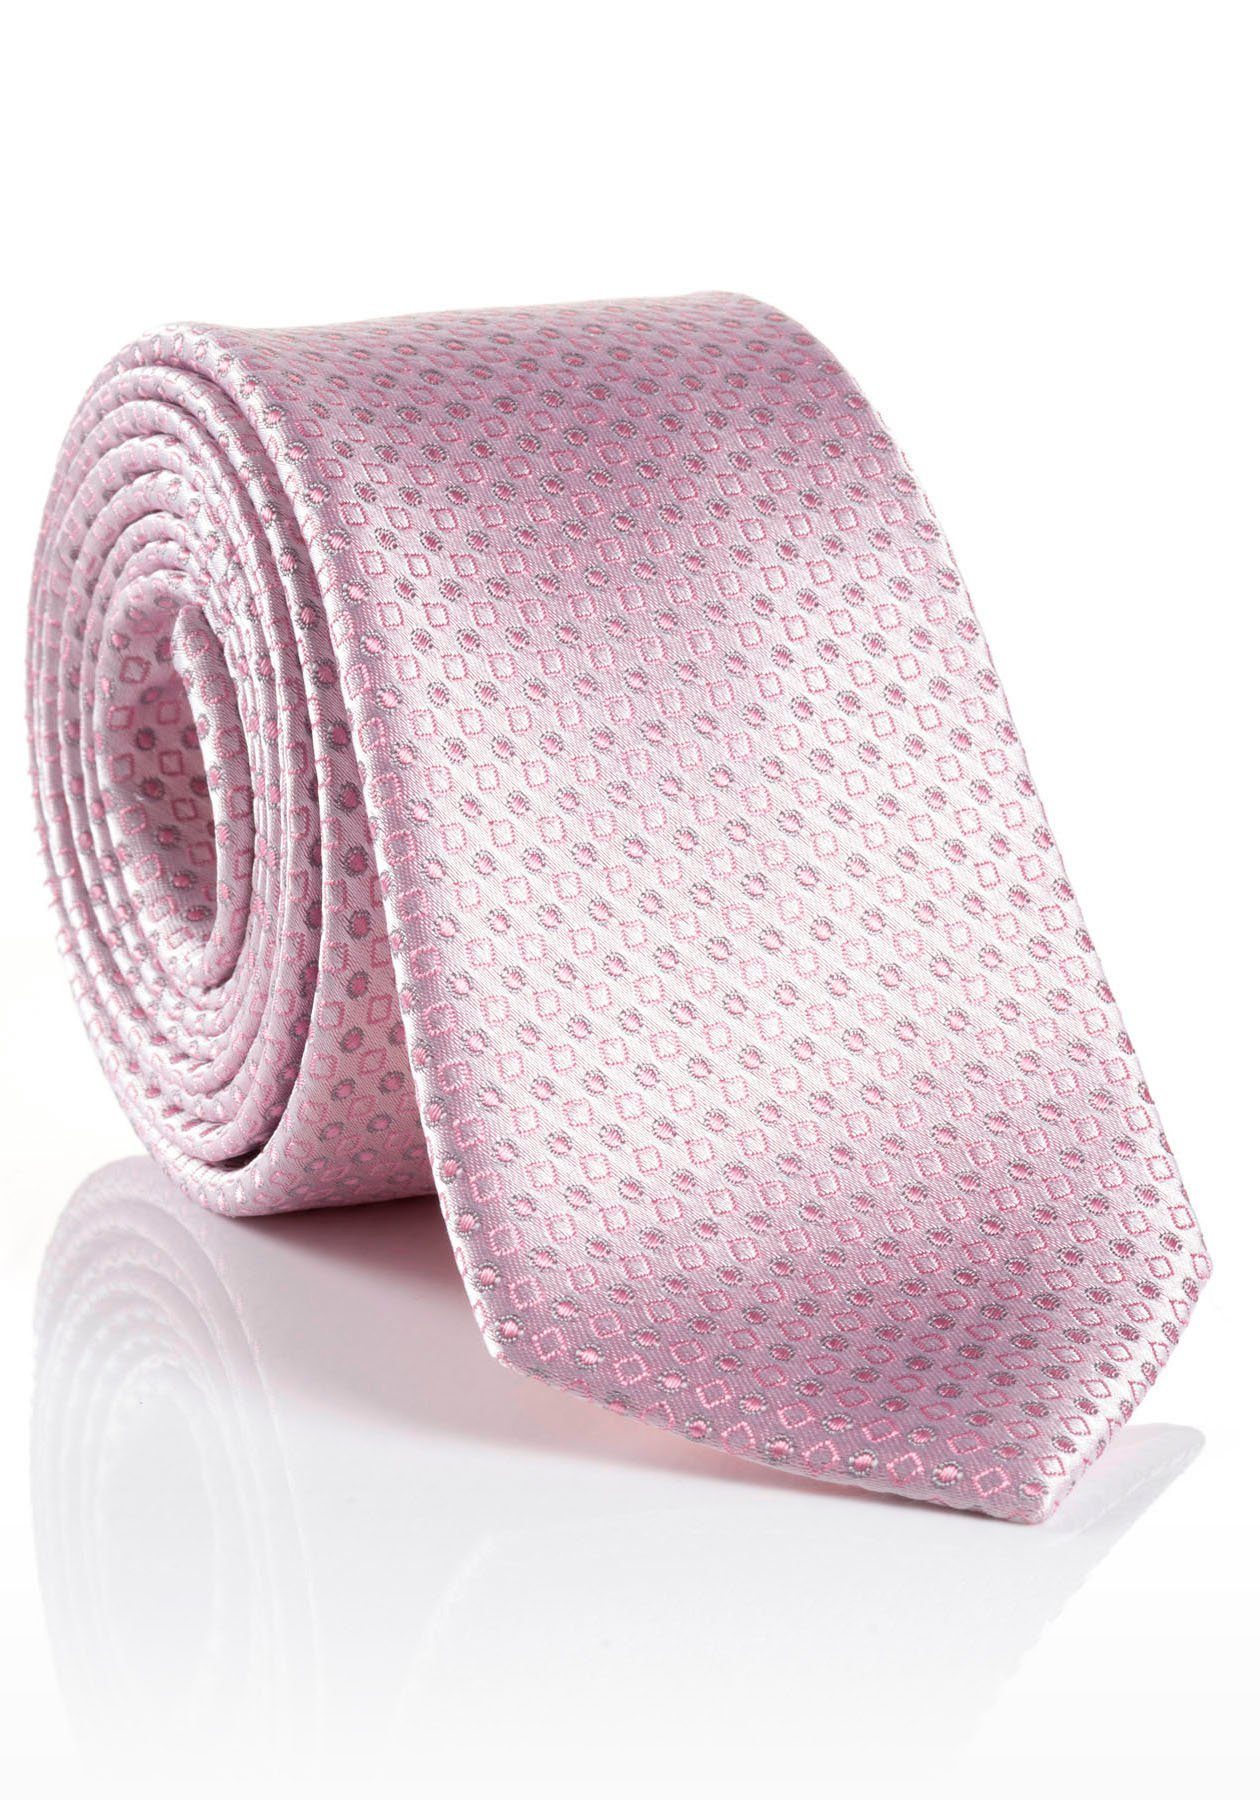 Krawatte MONTI Minimal-Design,Pastellfarben LEANO aus reiner Seide, Krawatte